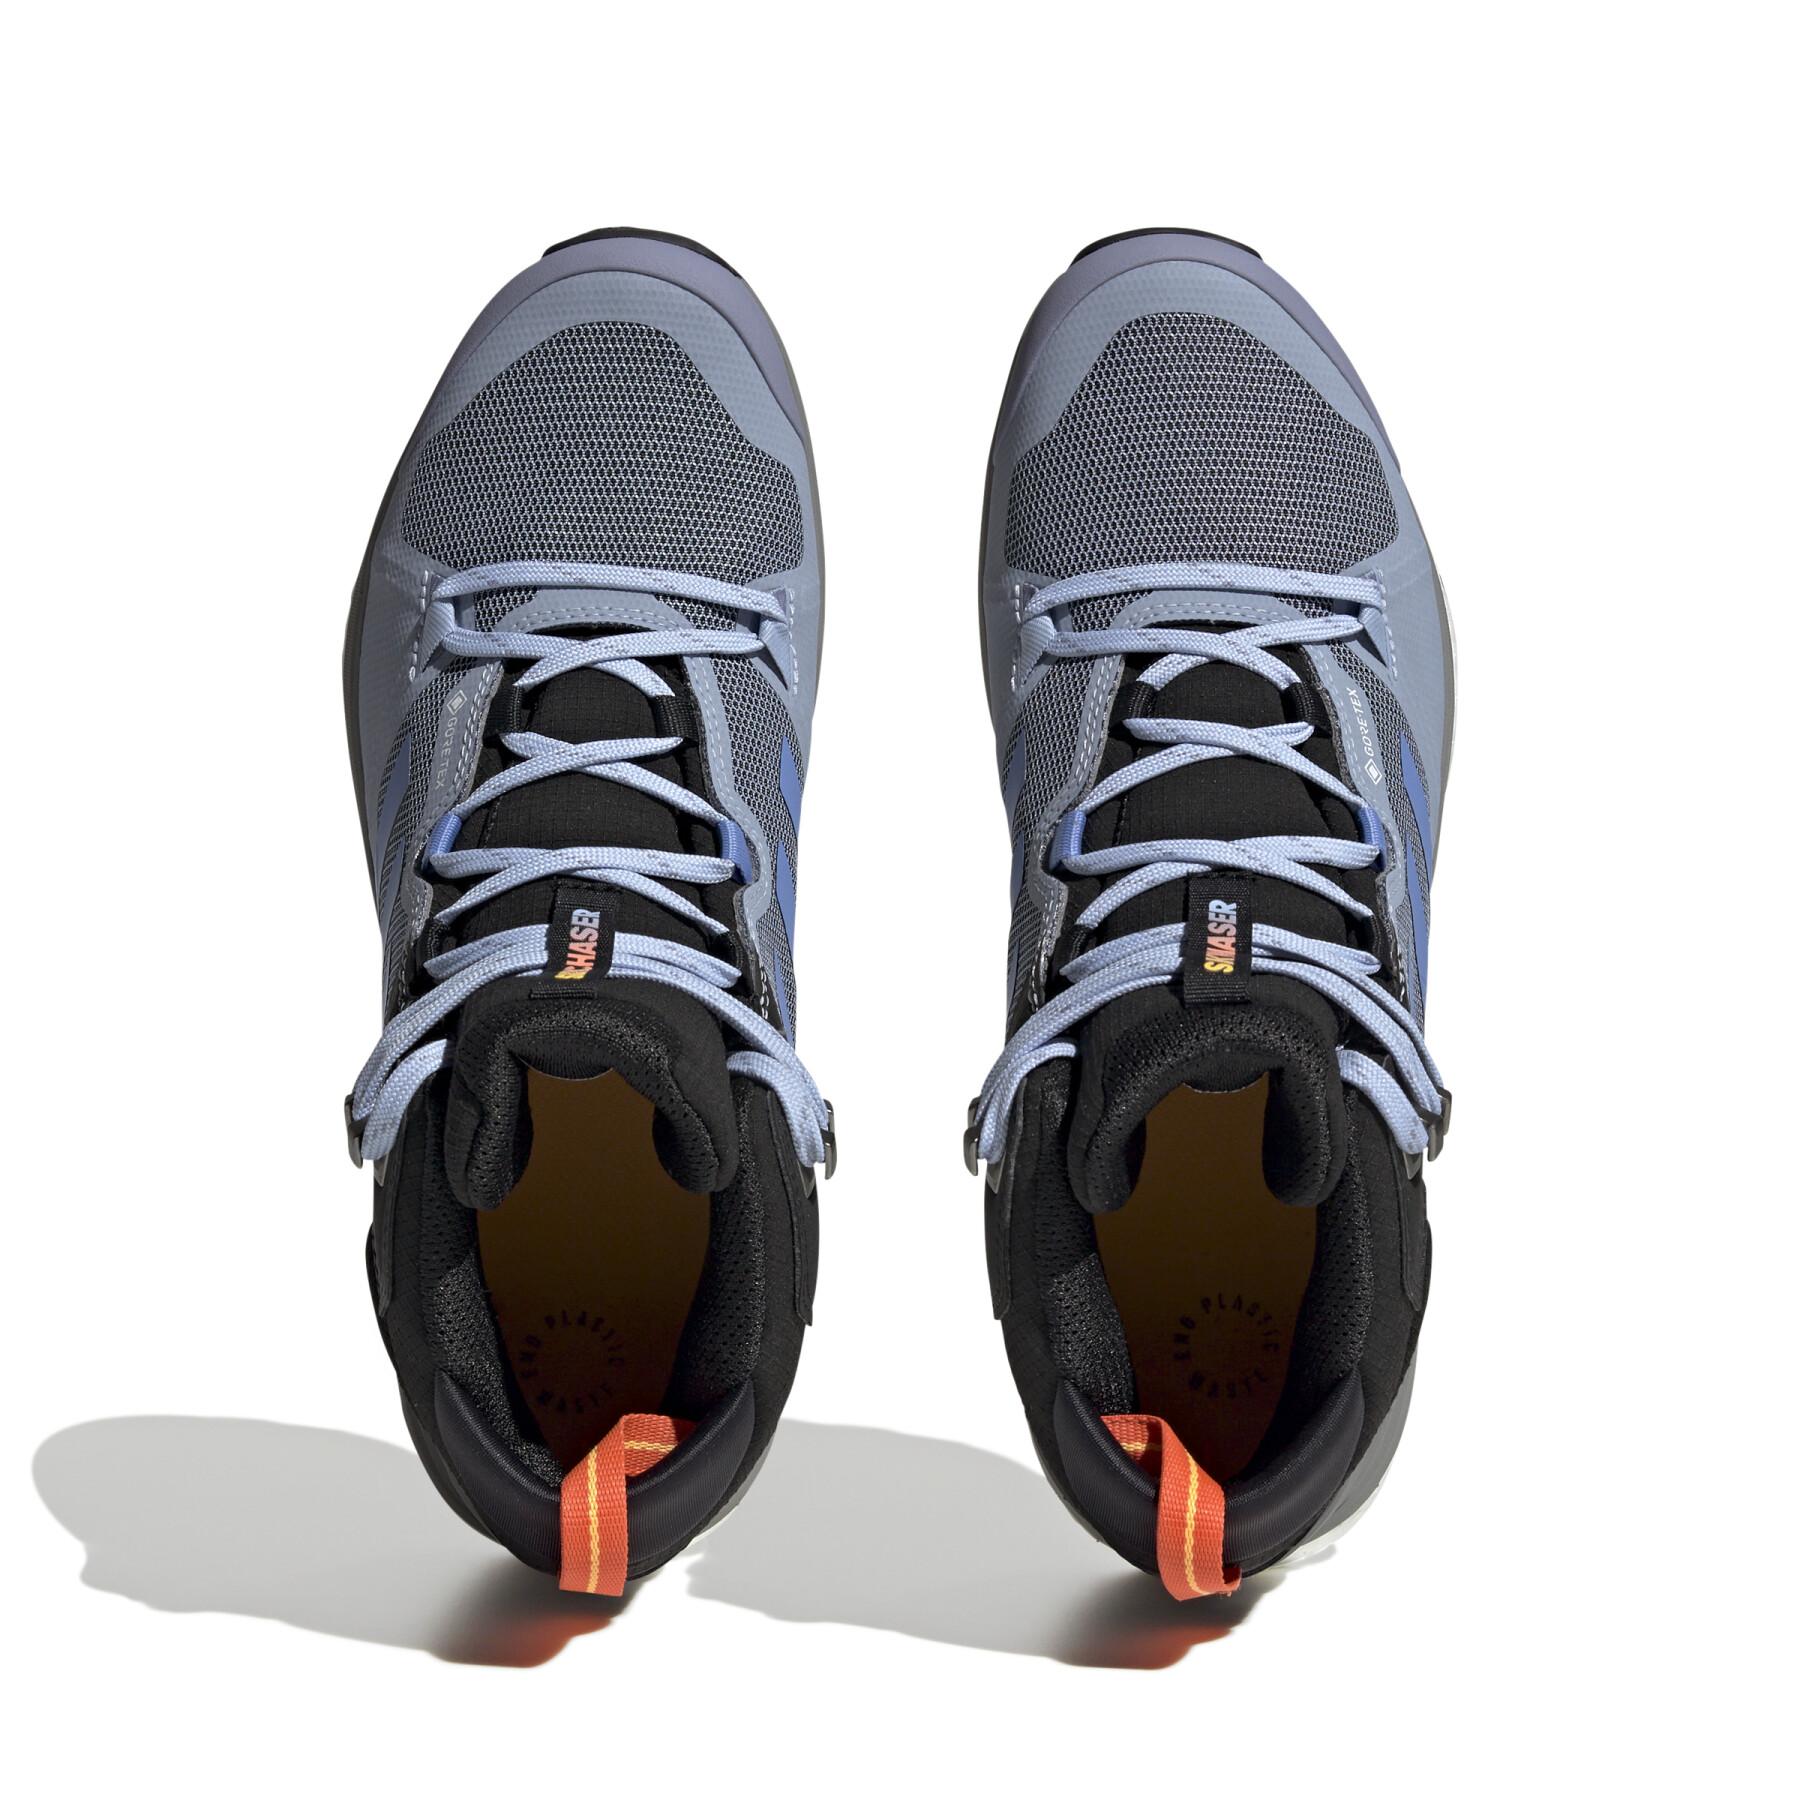 Chaussures de randonnée mid enfant adidas Terrex Skychaser Gore-Tex 2.0